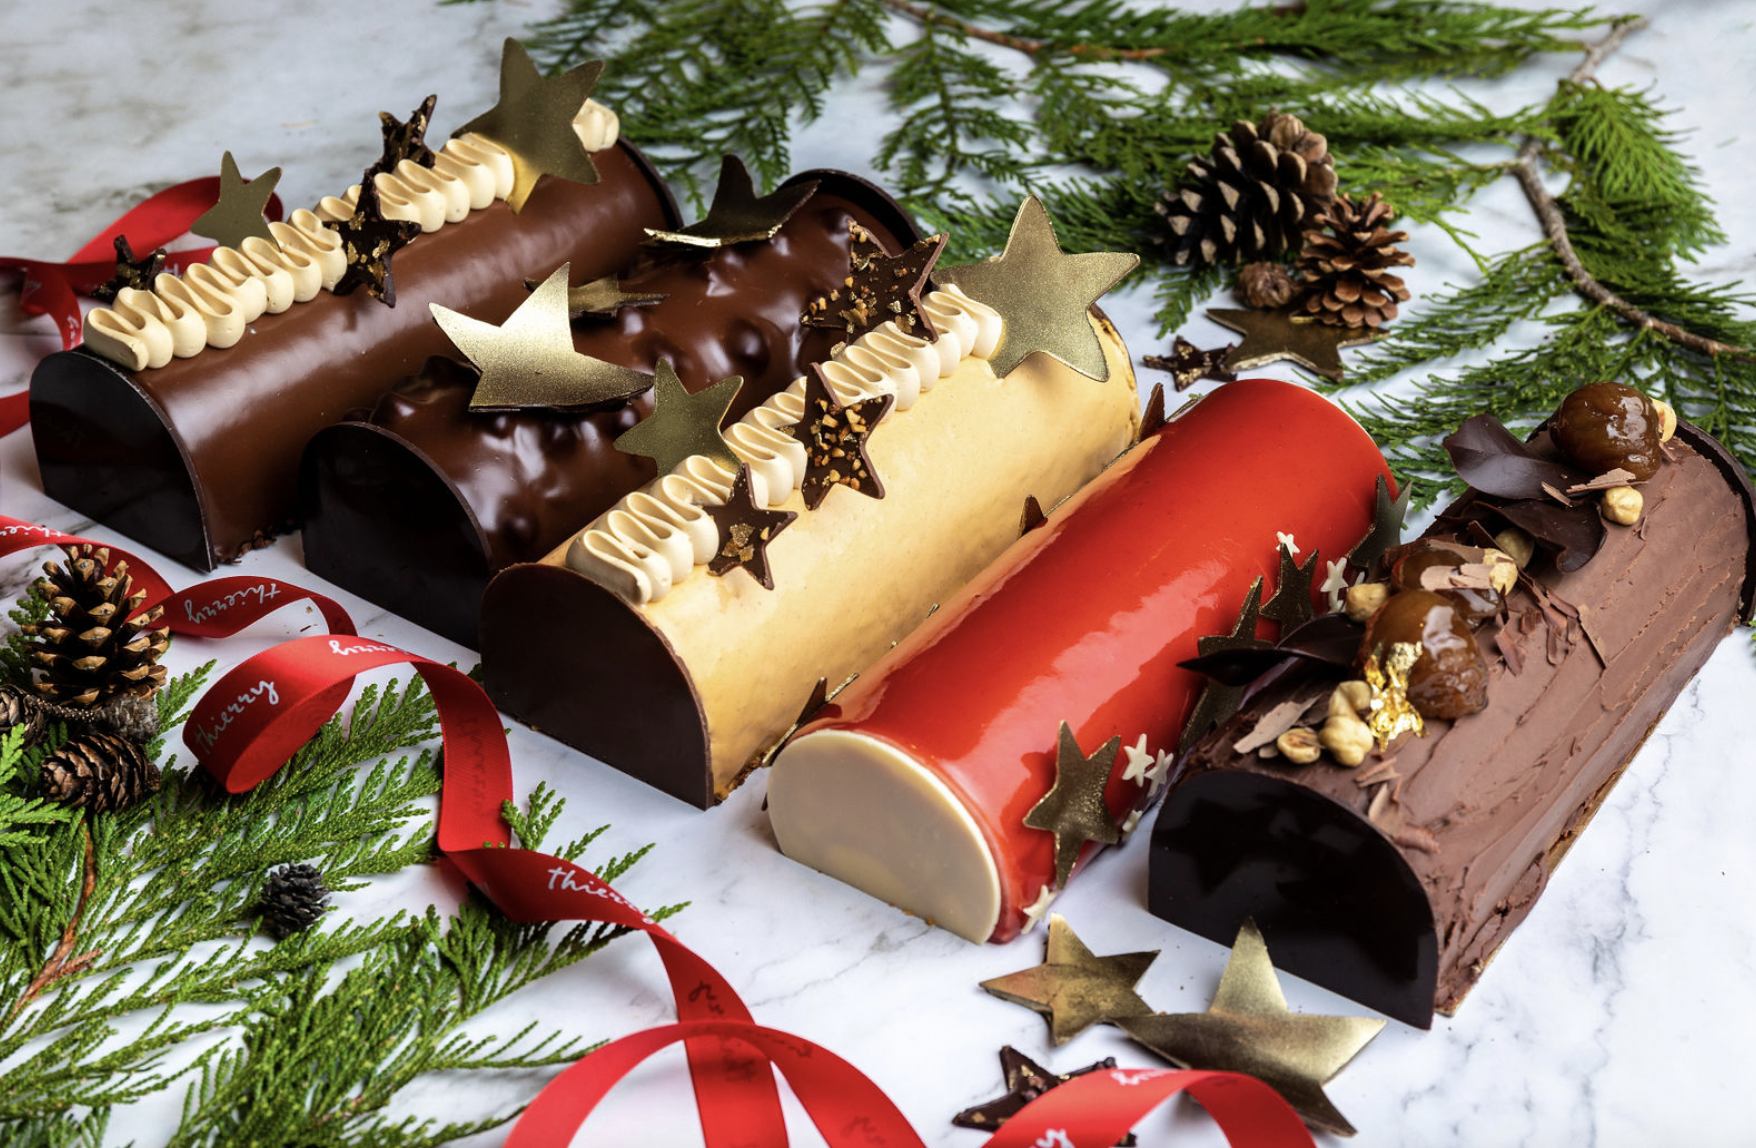 Chocolate Yule Log (Christmas Roll) with Chocolate Rocher Glaze